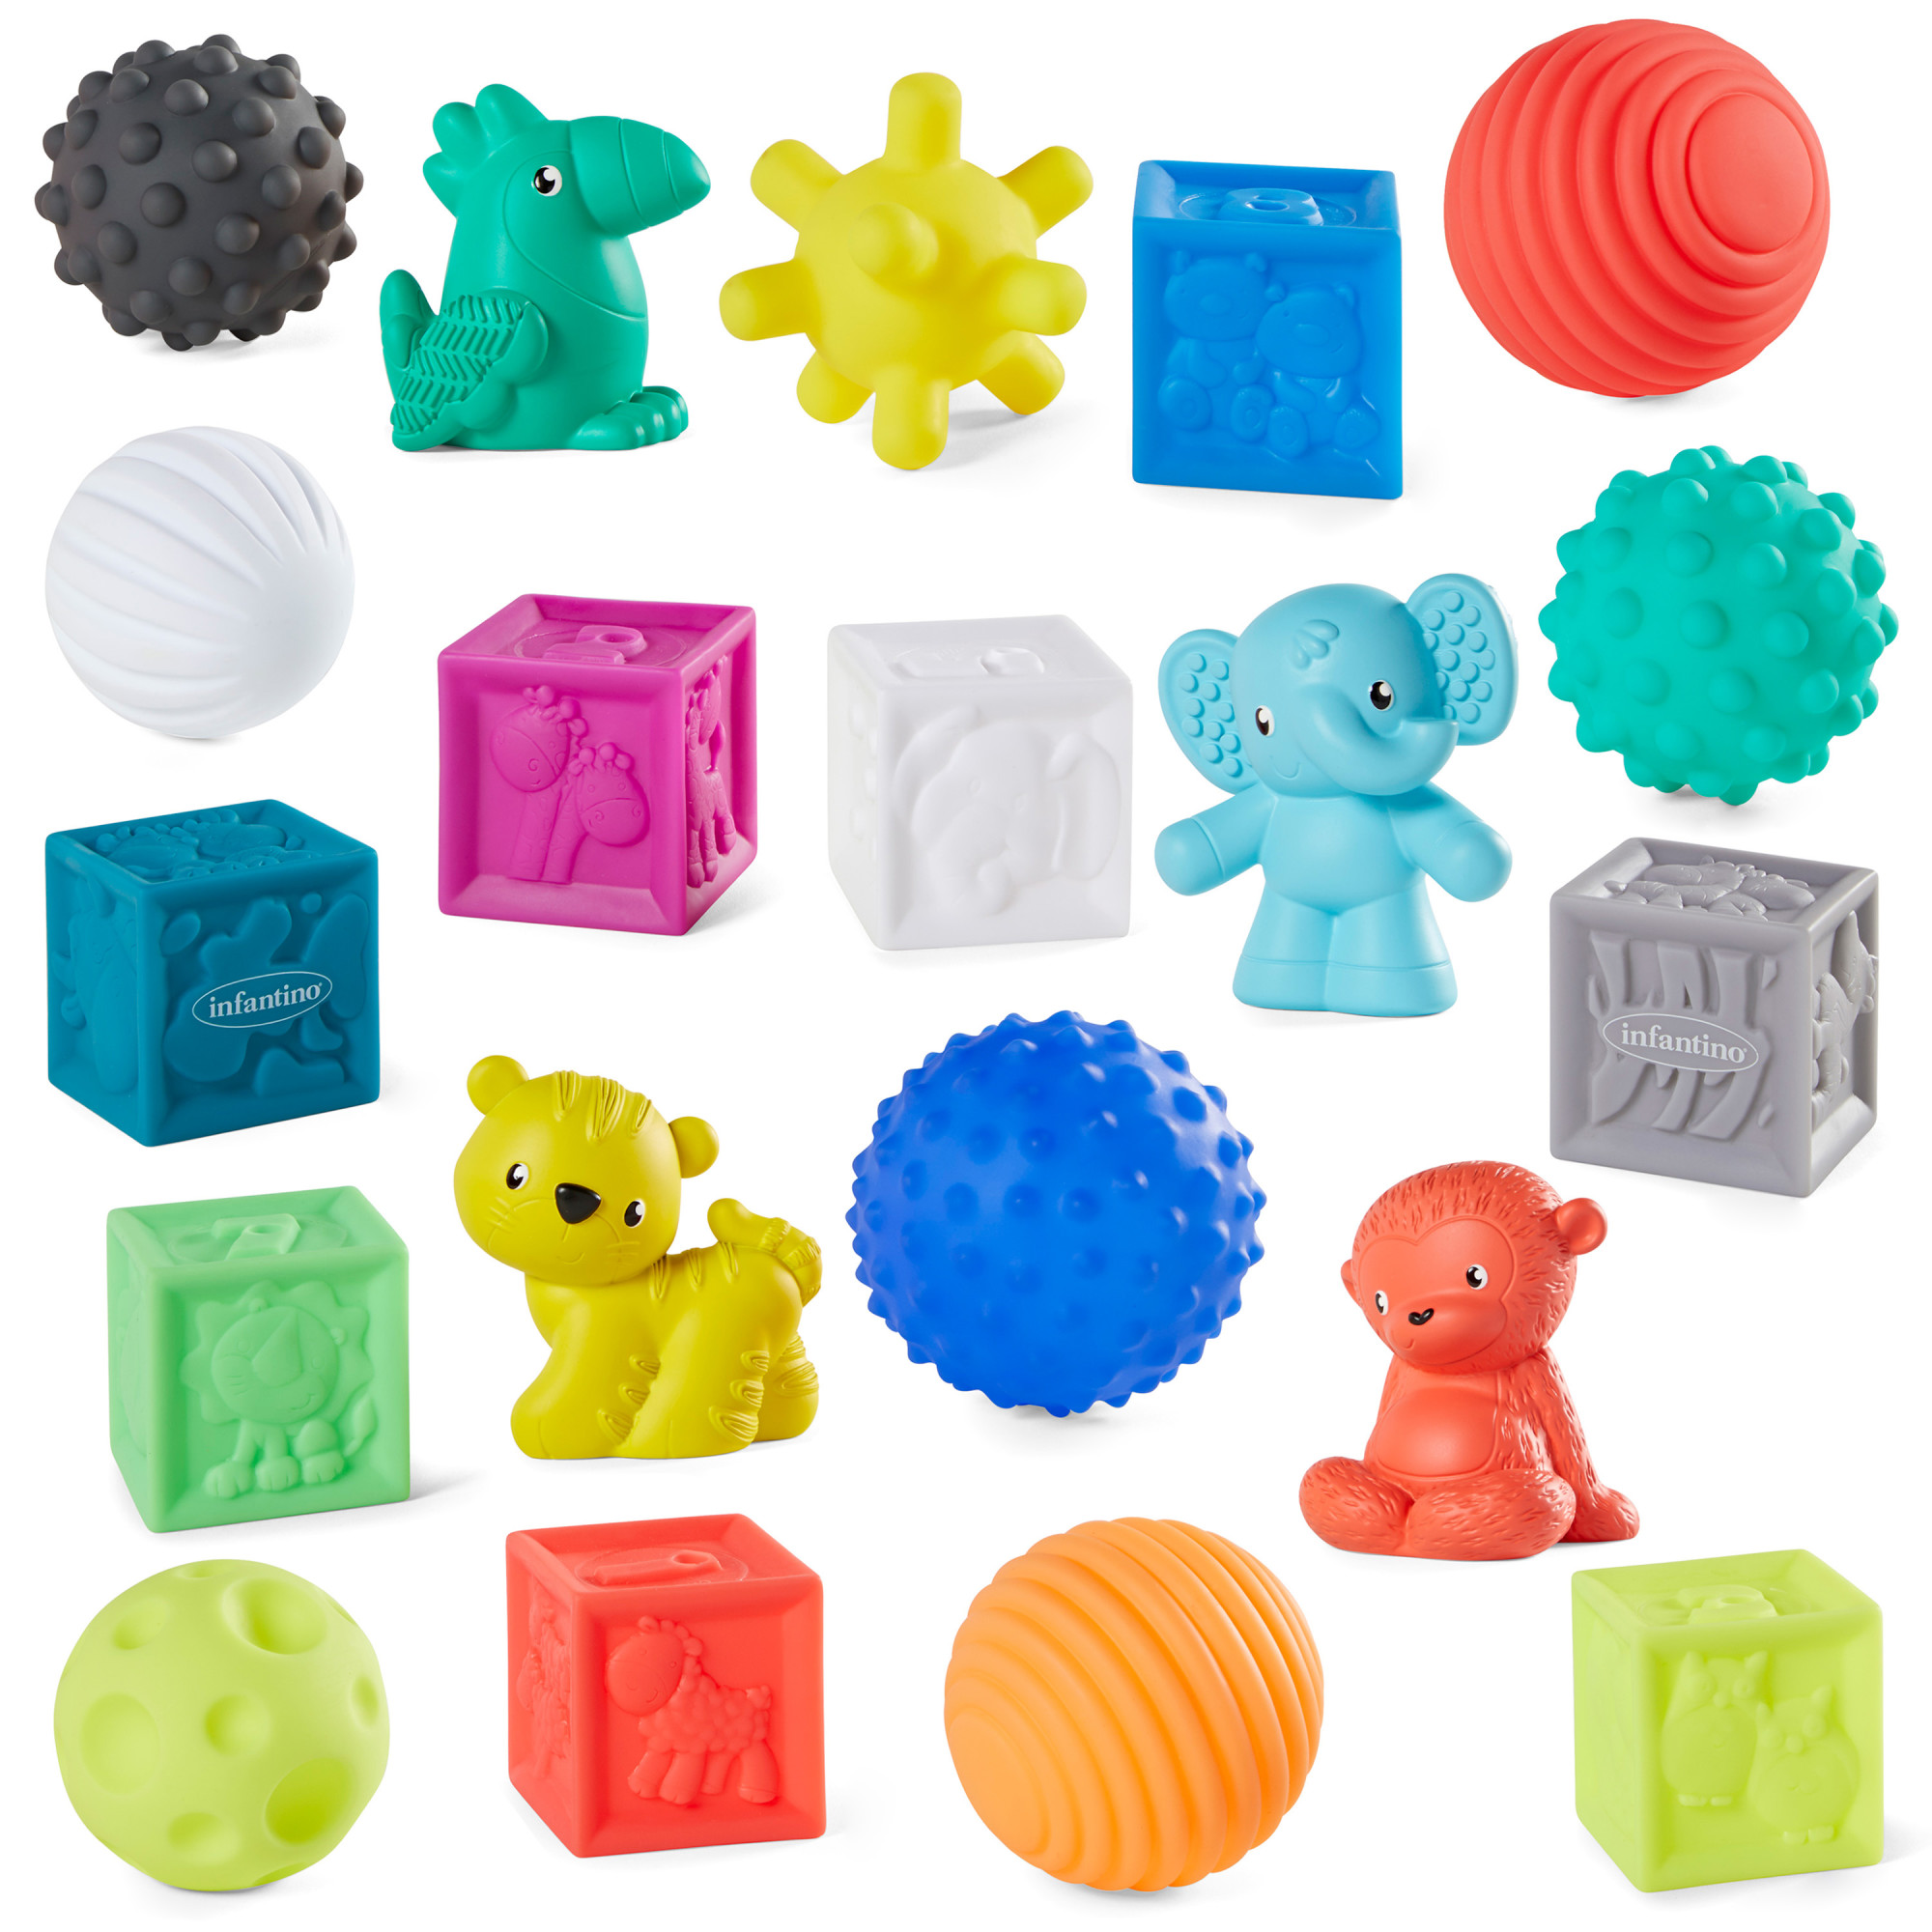 Infantino Sensory Soft Balls, Blocks & Animal Buddies, 6-12 Months, 20-Piece Set, Multicolor - image 1 of 8